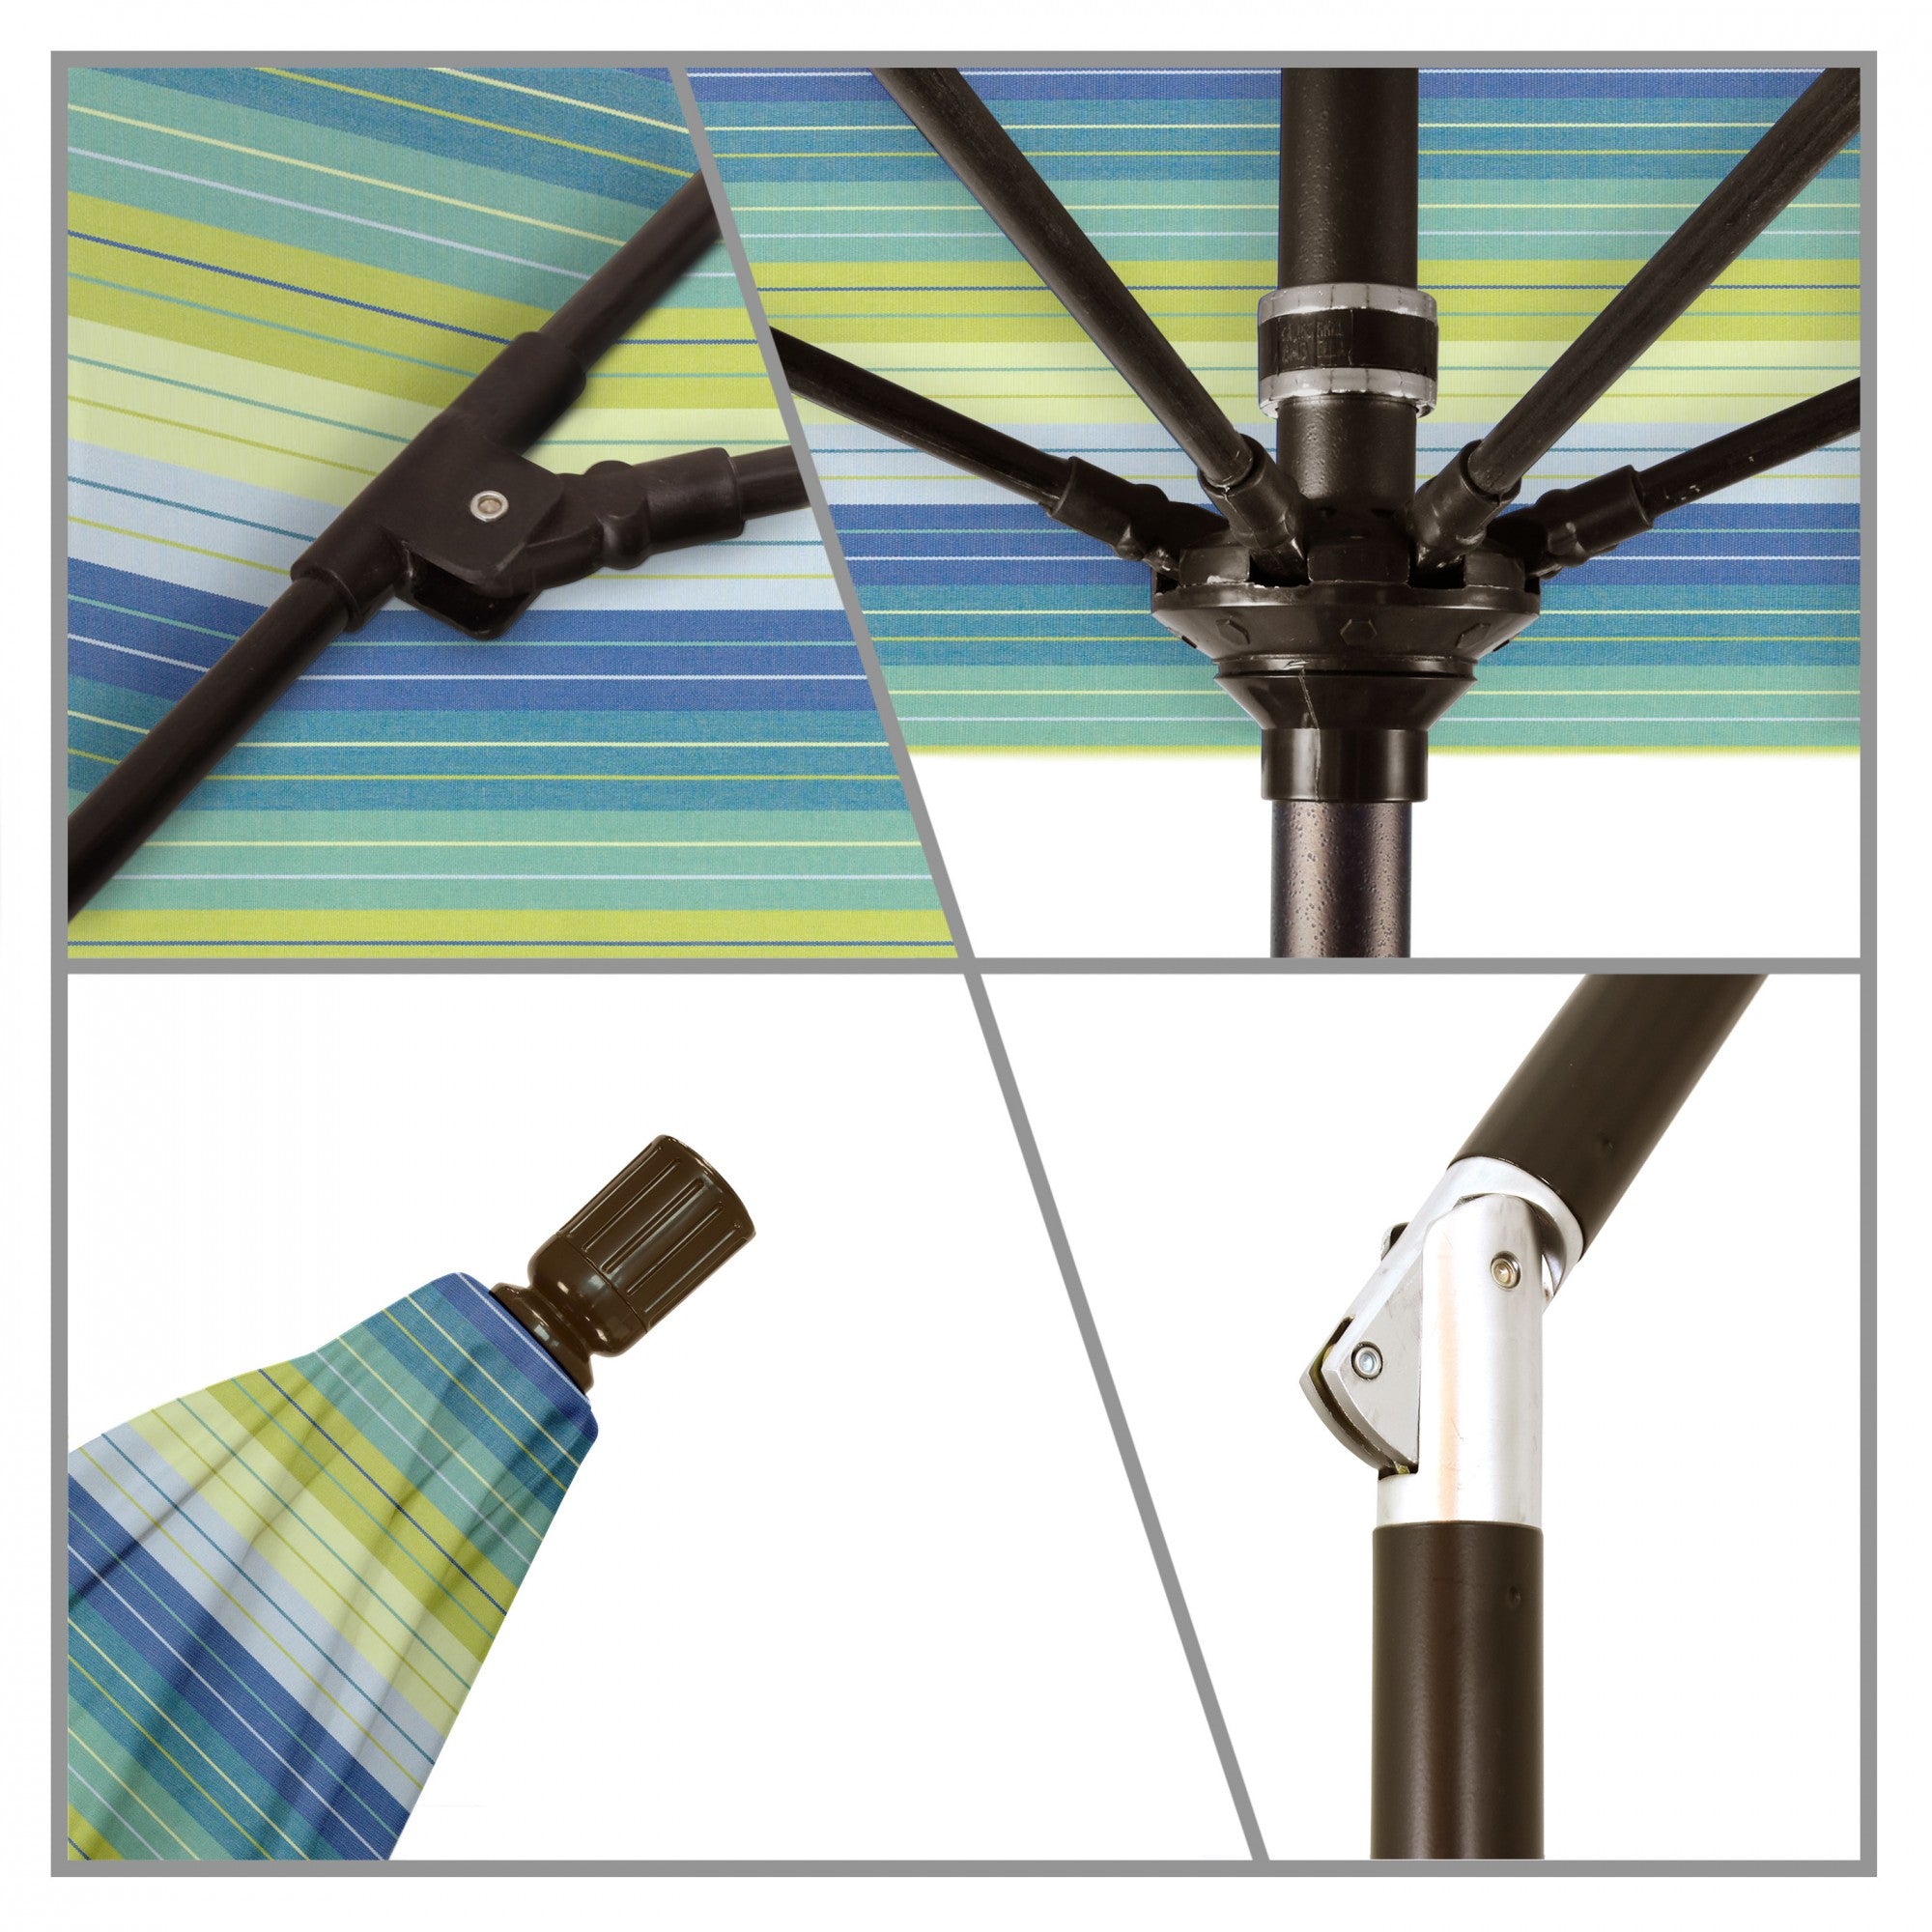 California Umbrella - 9' - Patio Umbrella Umbrella - Aluminum Pole - Seville Seaside - Sunbrella  - GSCUF908117-5608